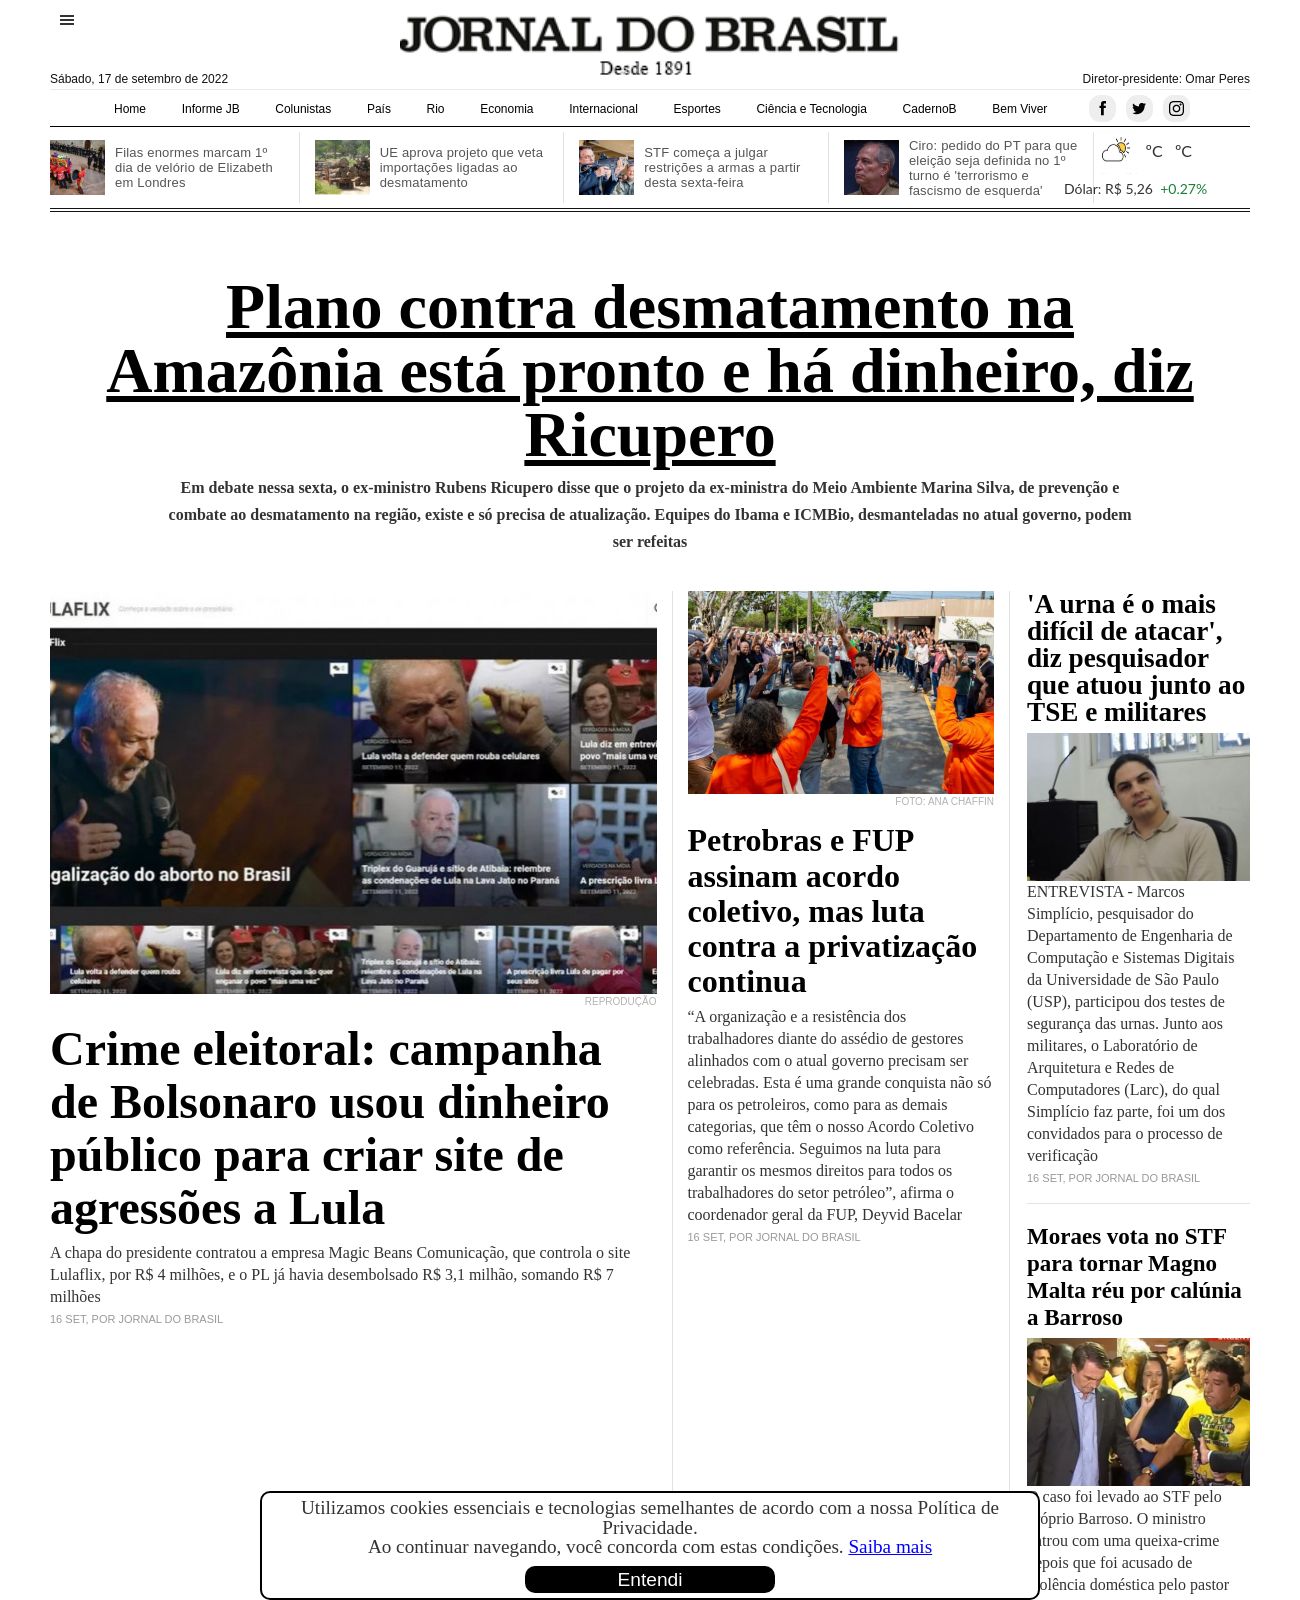 Jornal do Brasil at 2022-09-17 08:58:58-03:00 local time